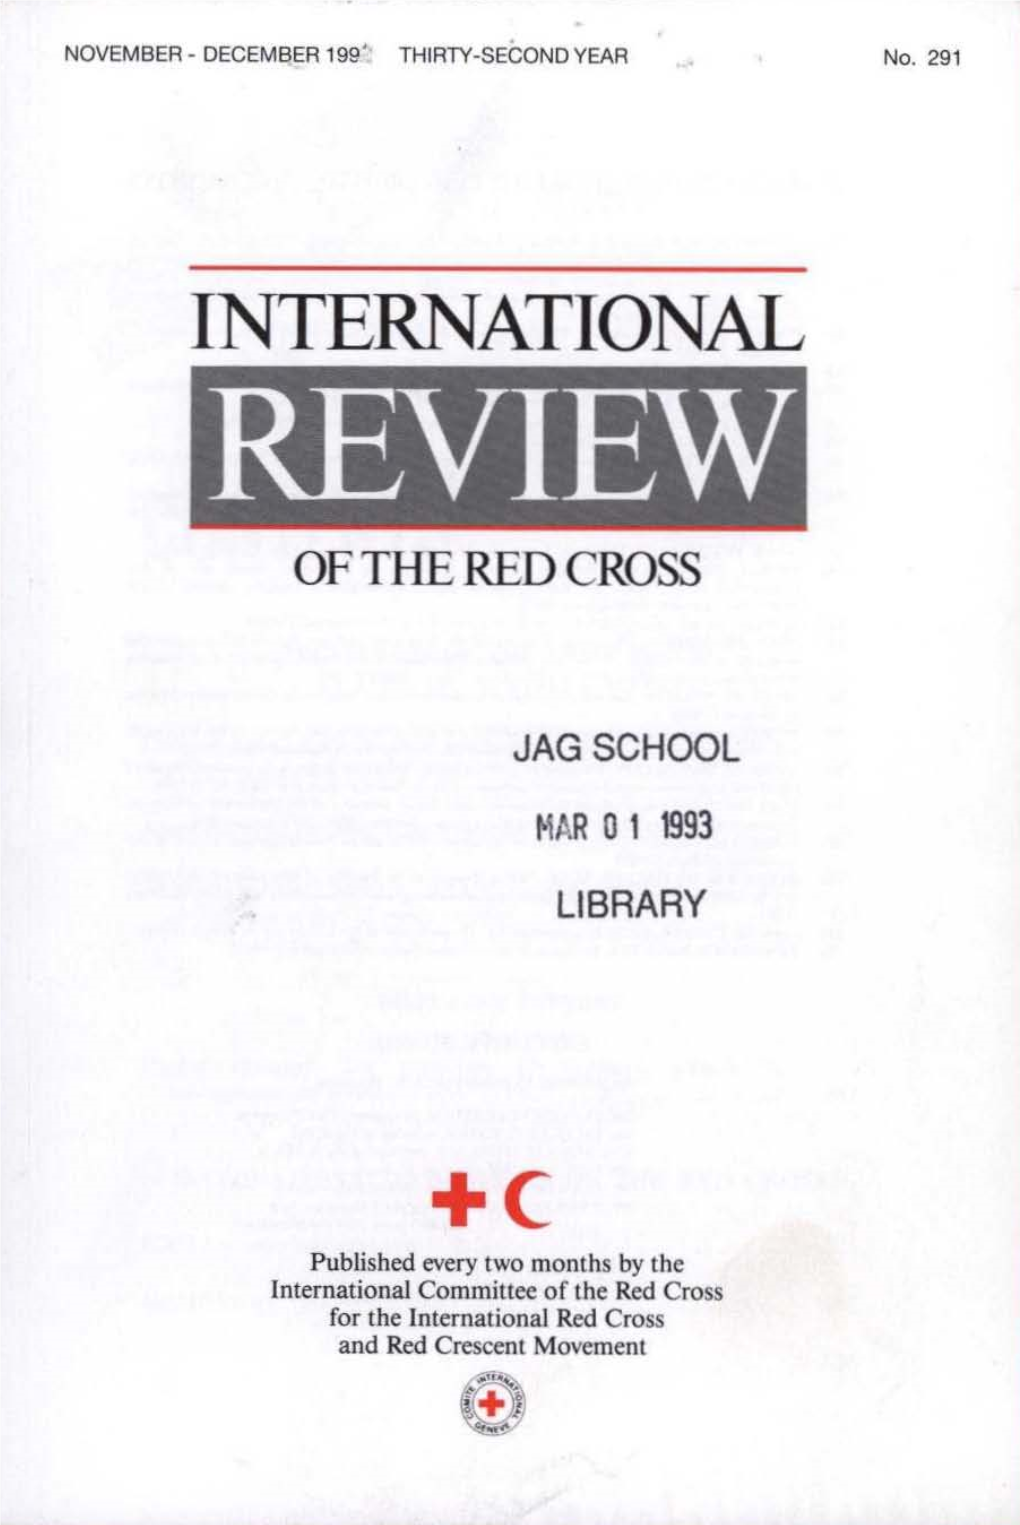 International Review of the Red Cross, November-December 1992